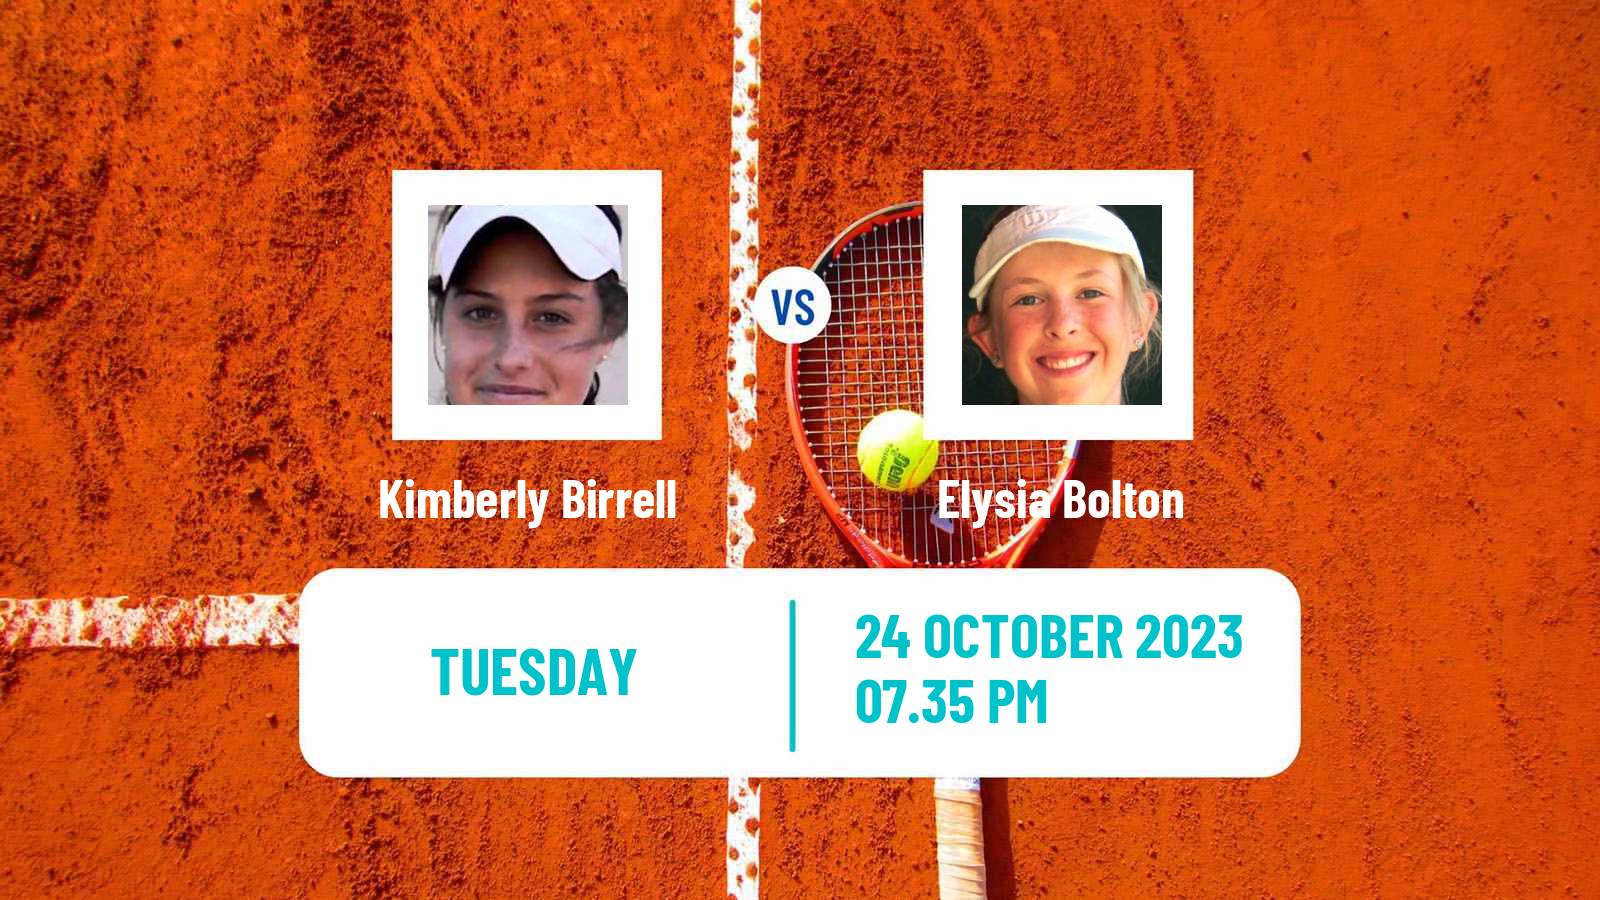 Tennis ITF W60 Playford Women Kimberly Birrell - Elysia Bolton